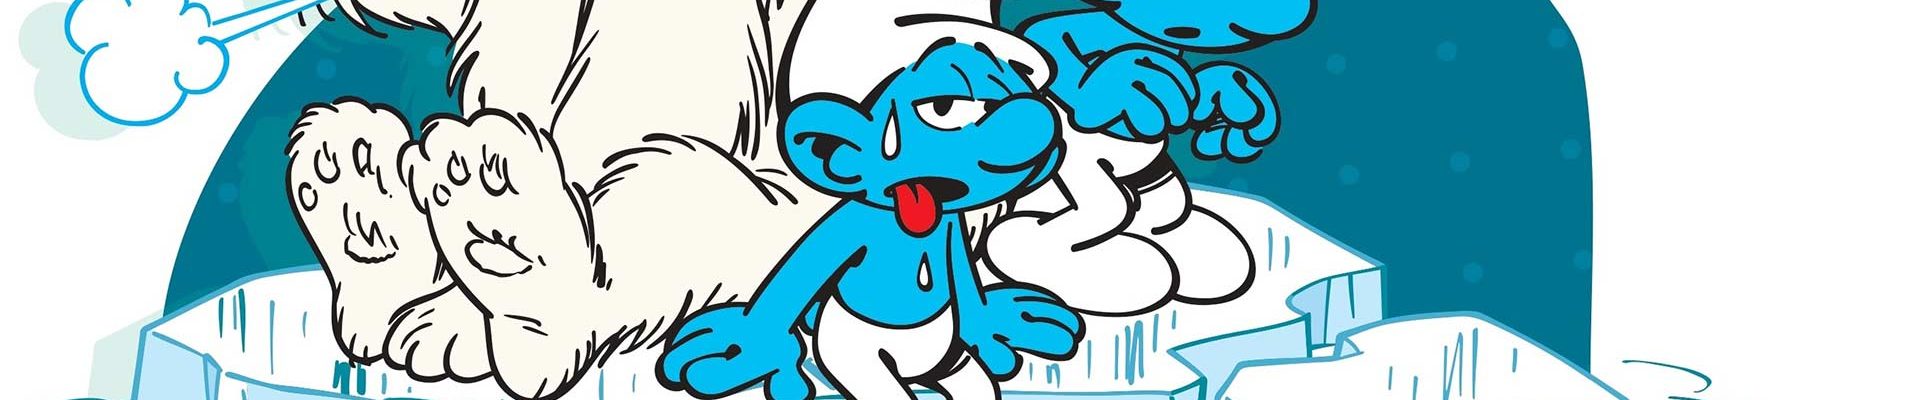 Comicdom Con Athens - Think Blue Think Smurfs